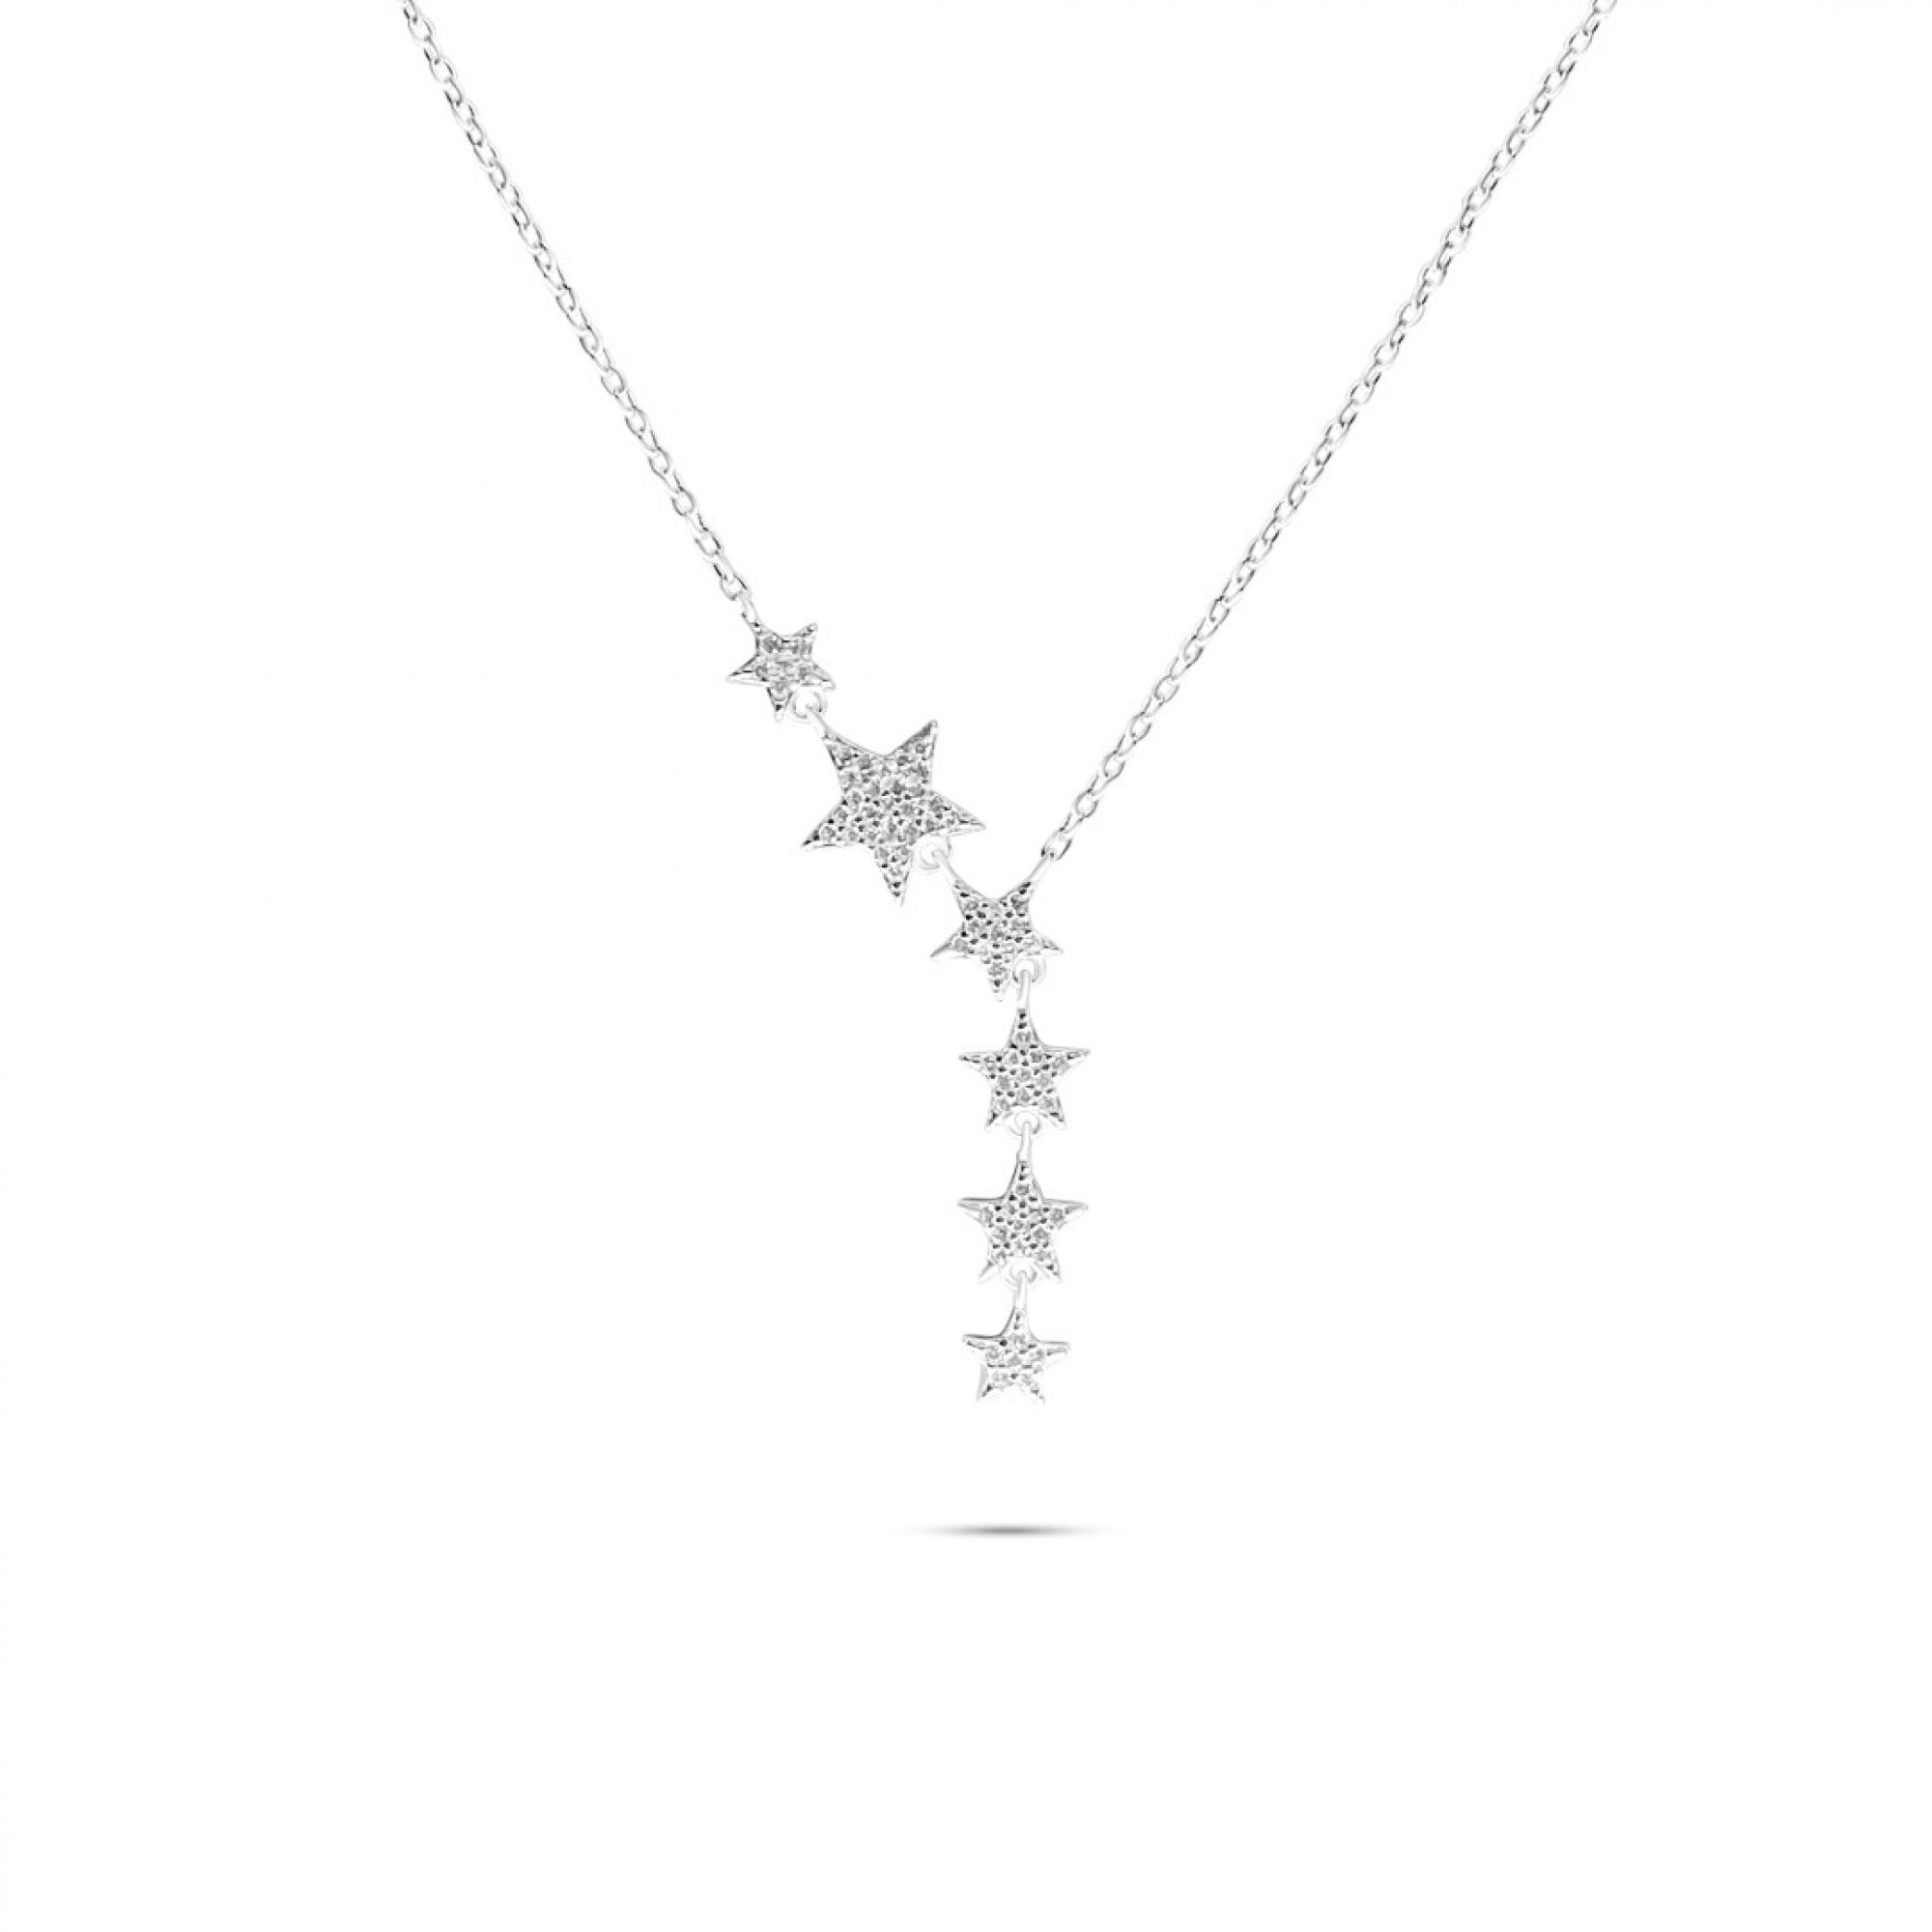 Star necklace with zircon stones